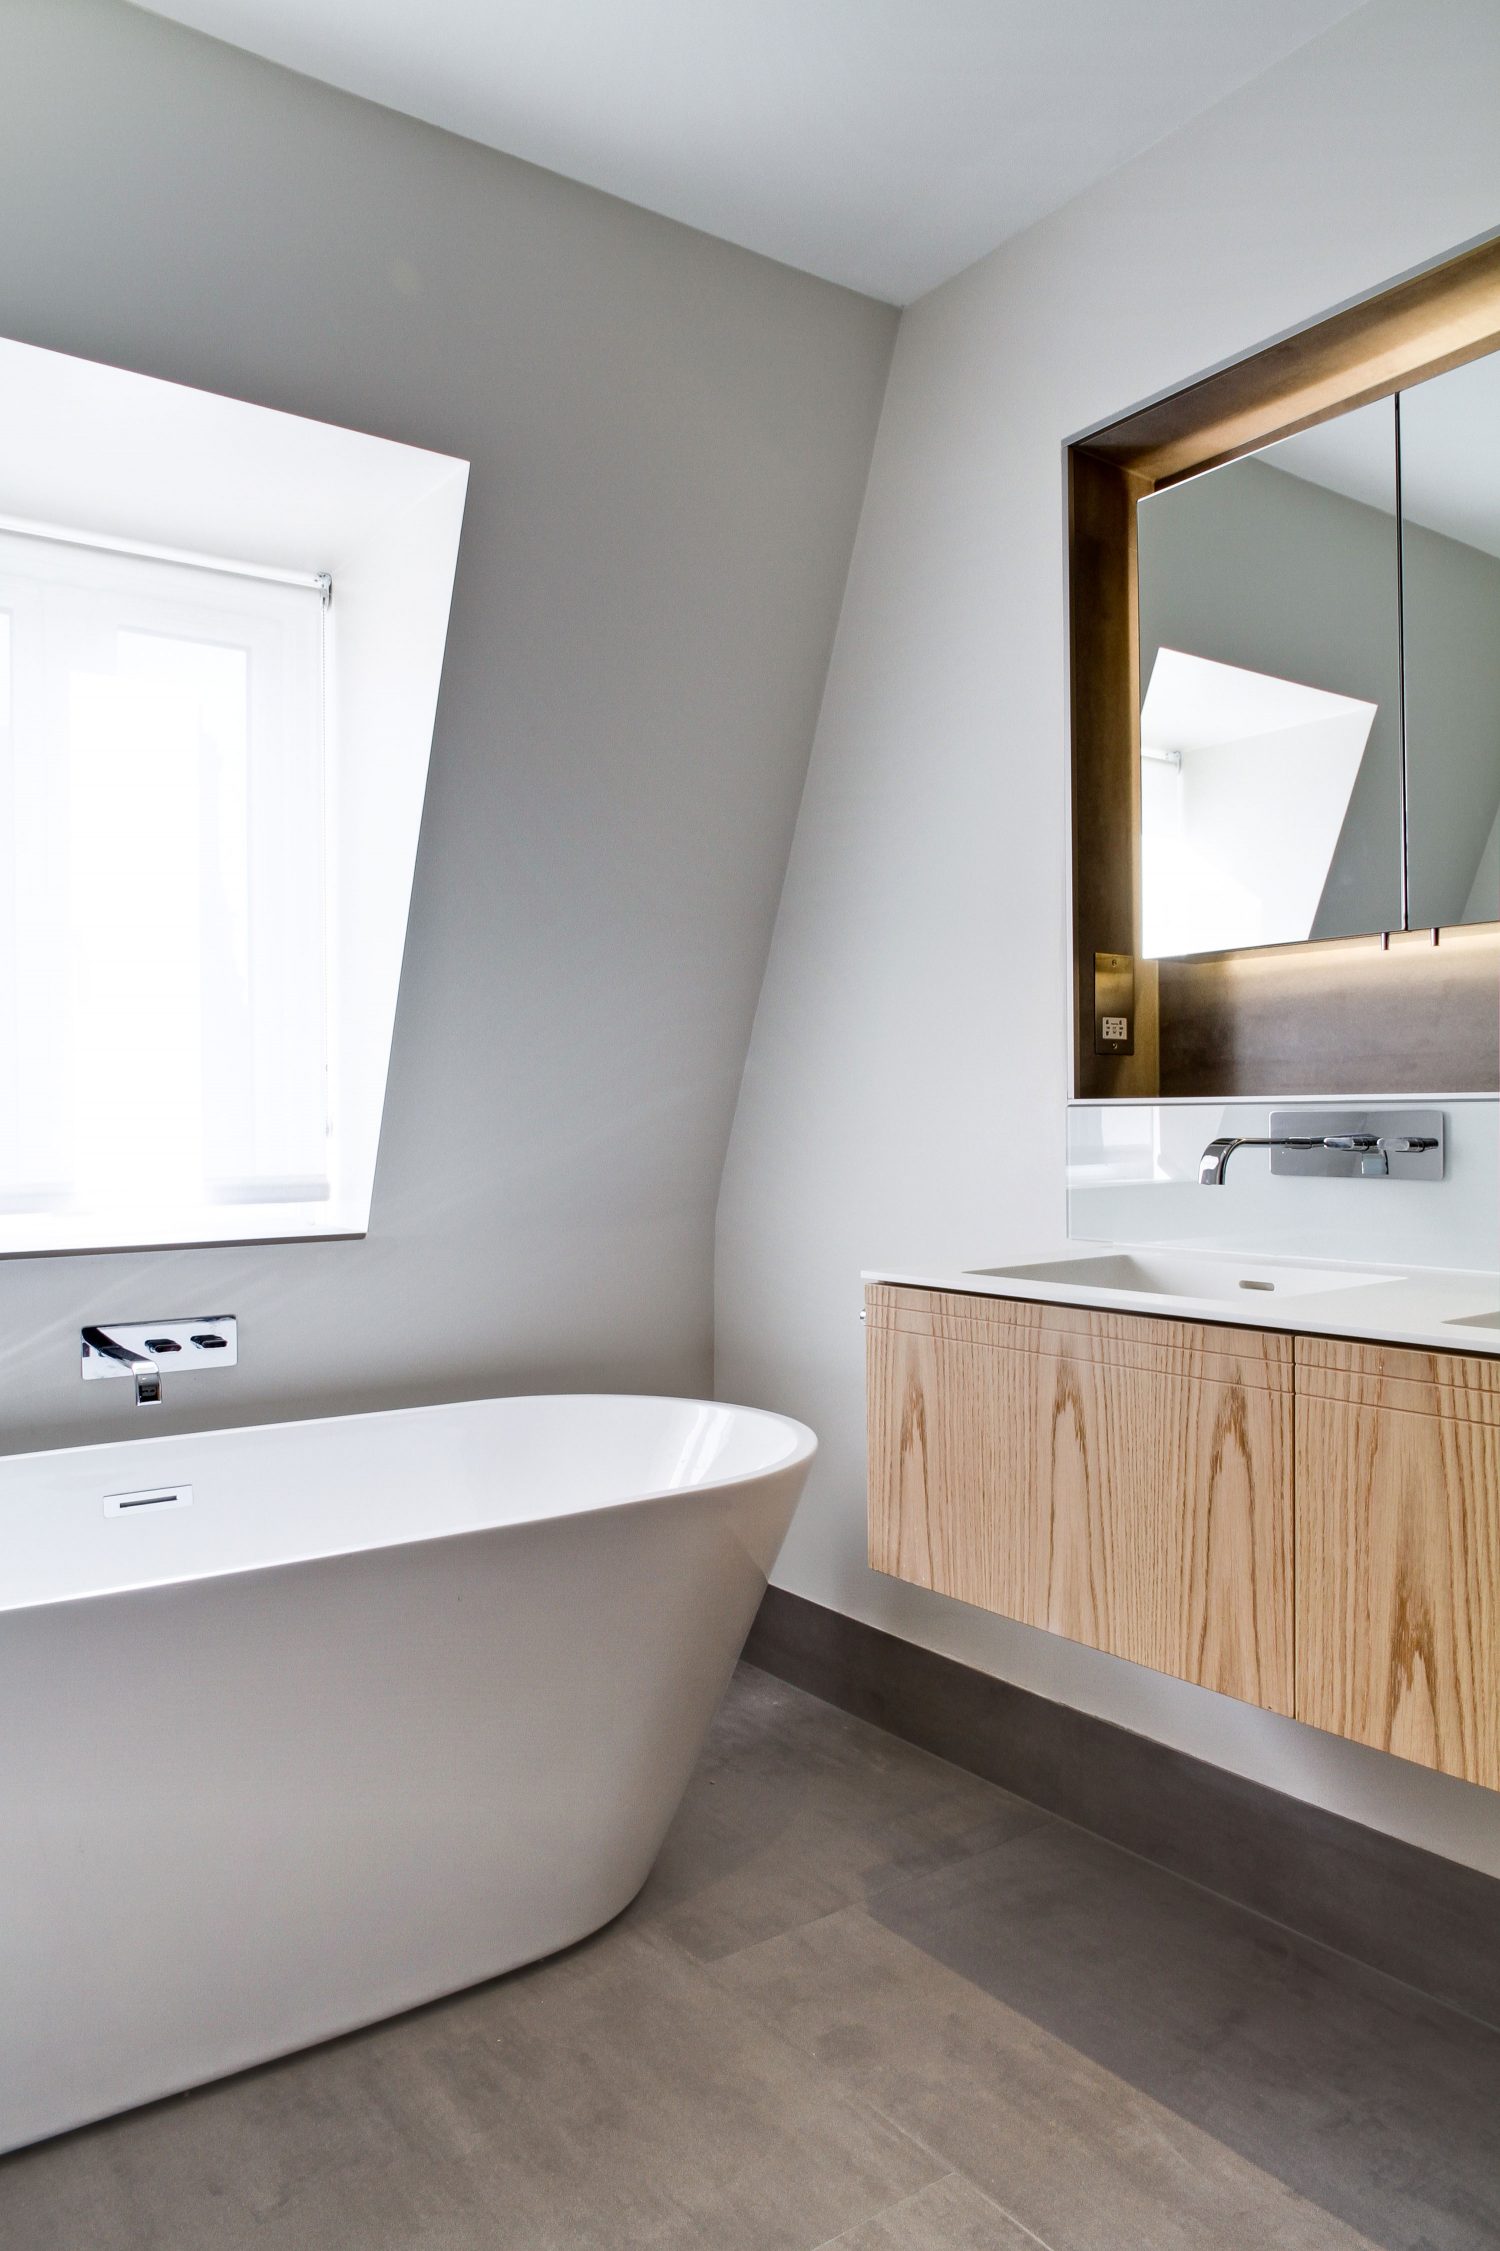 Let It Be Penthouse by Daniel Hopwood - bathroom. Show home interior design